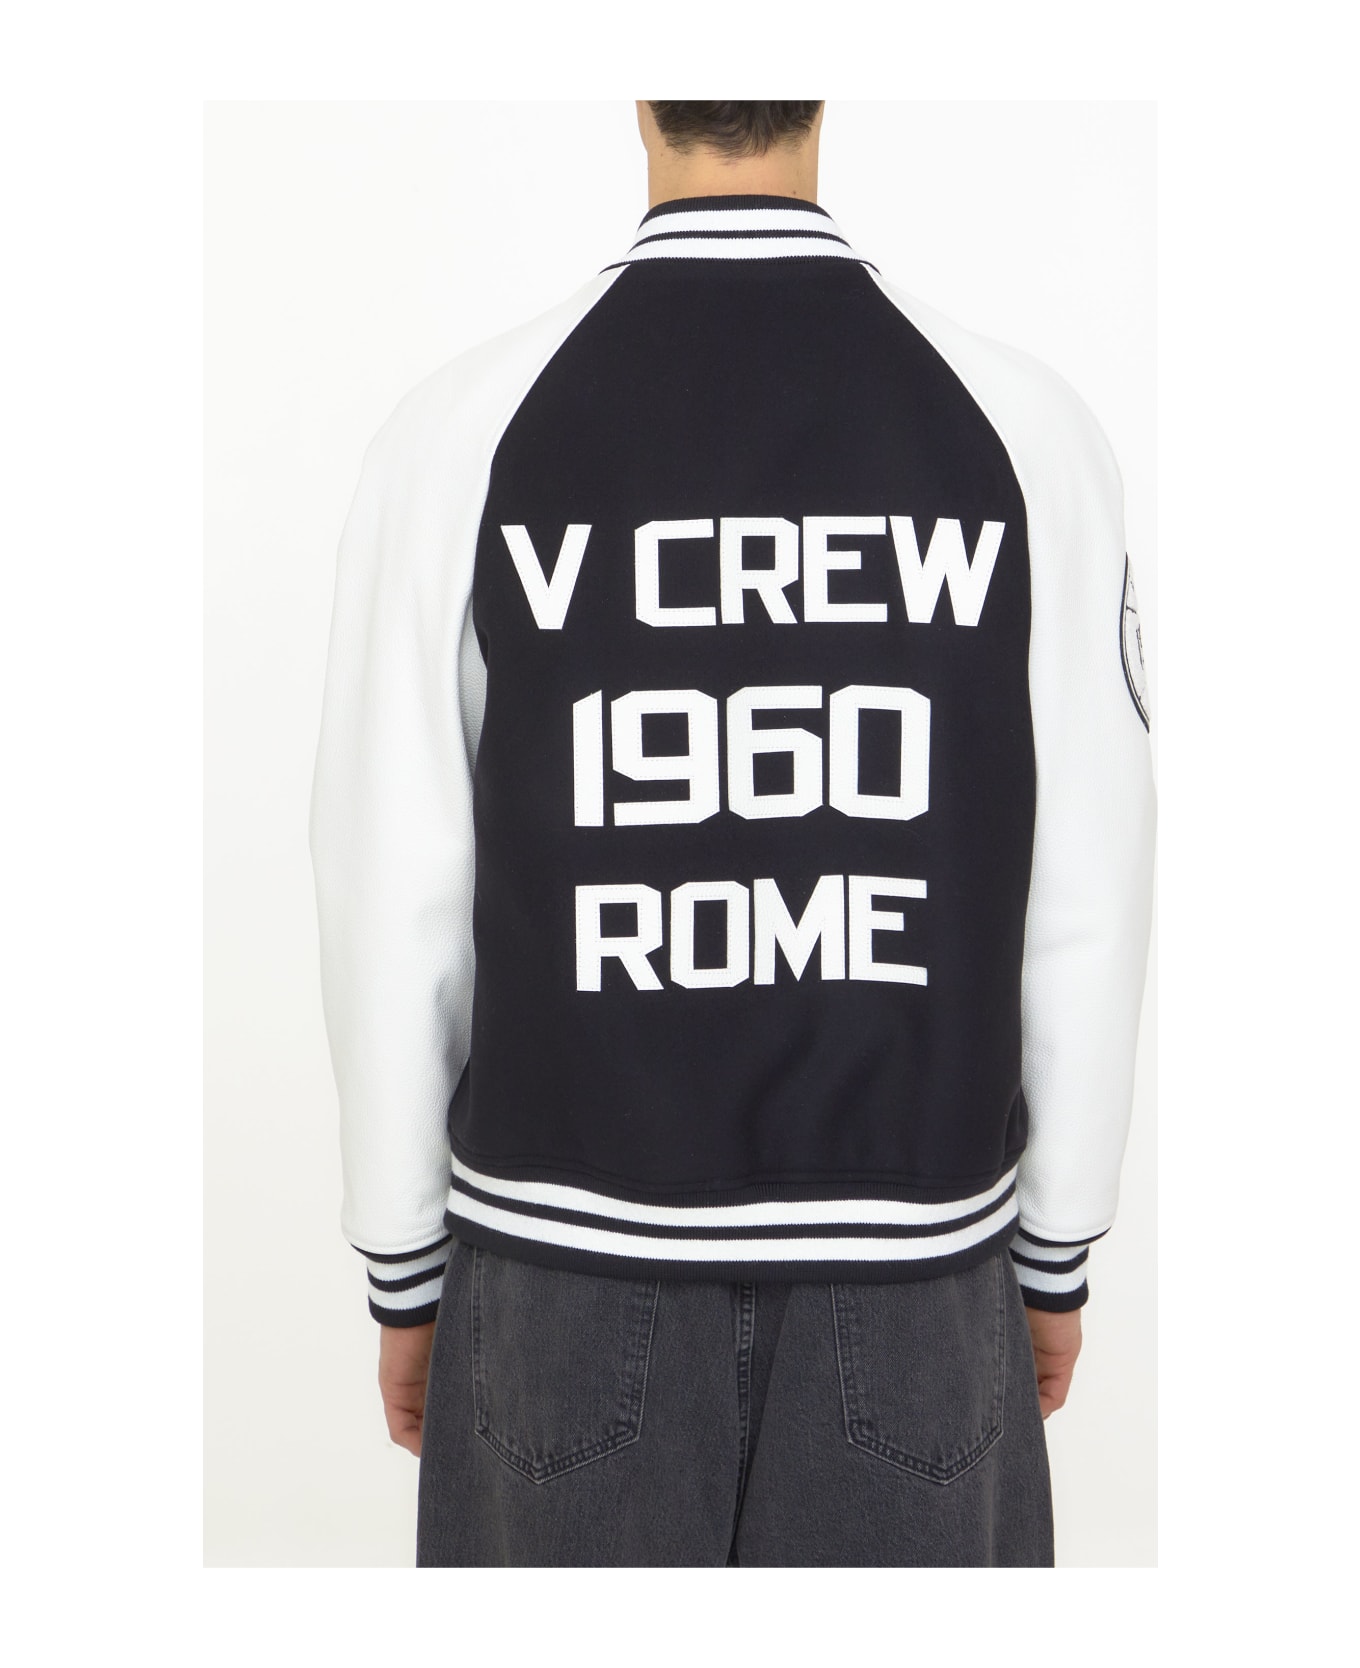 Valentino Garavani V Crew Patch Bomber Jacket - Black, white